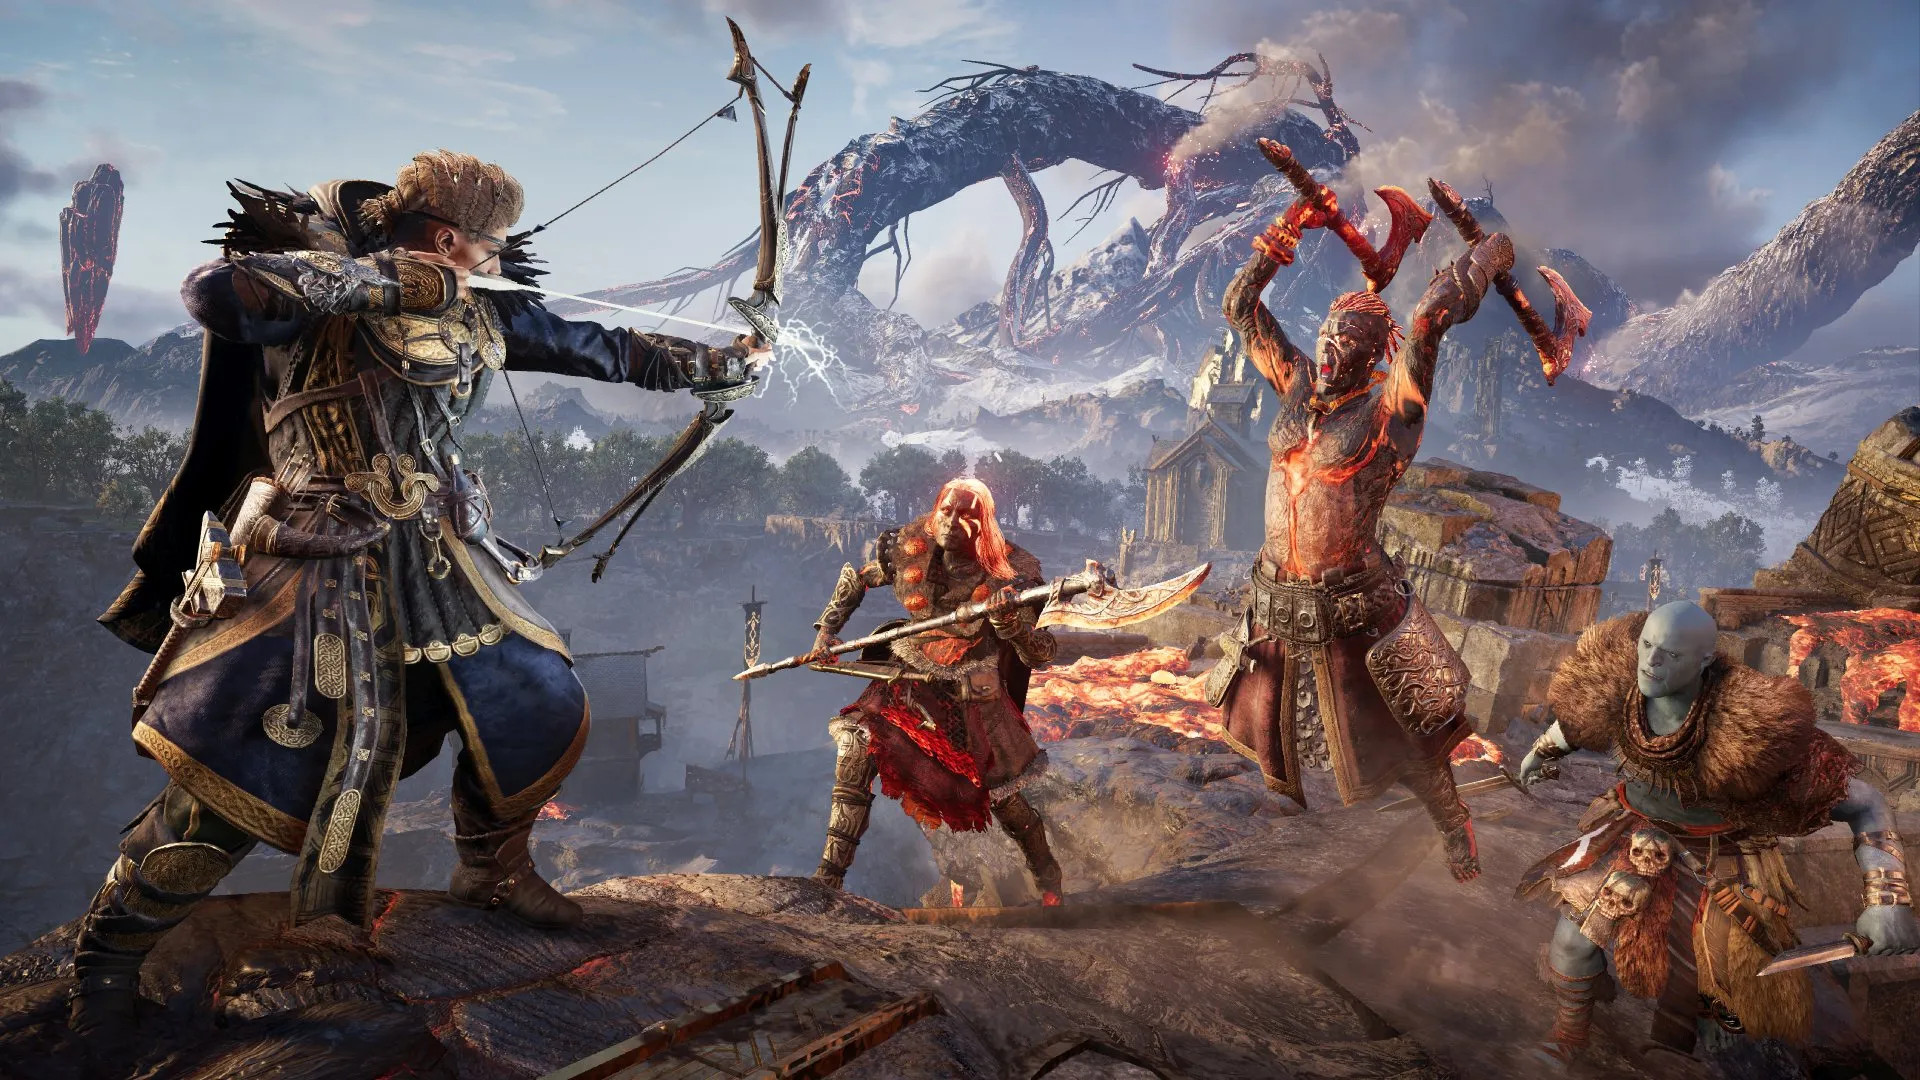 Հավի կռվում է կրակոտ թշնամիների դեմ Assassin's Creed Valhalla. Dawn of Ragnarok-ում